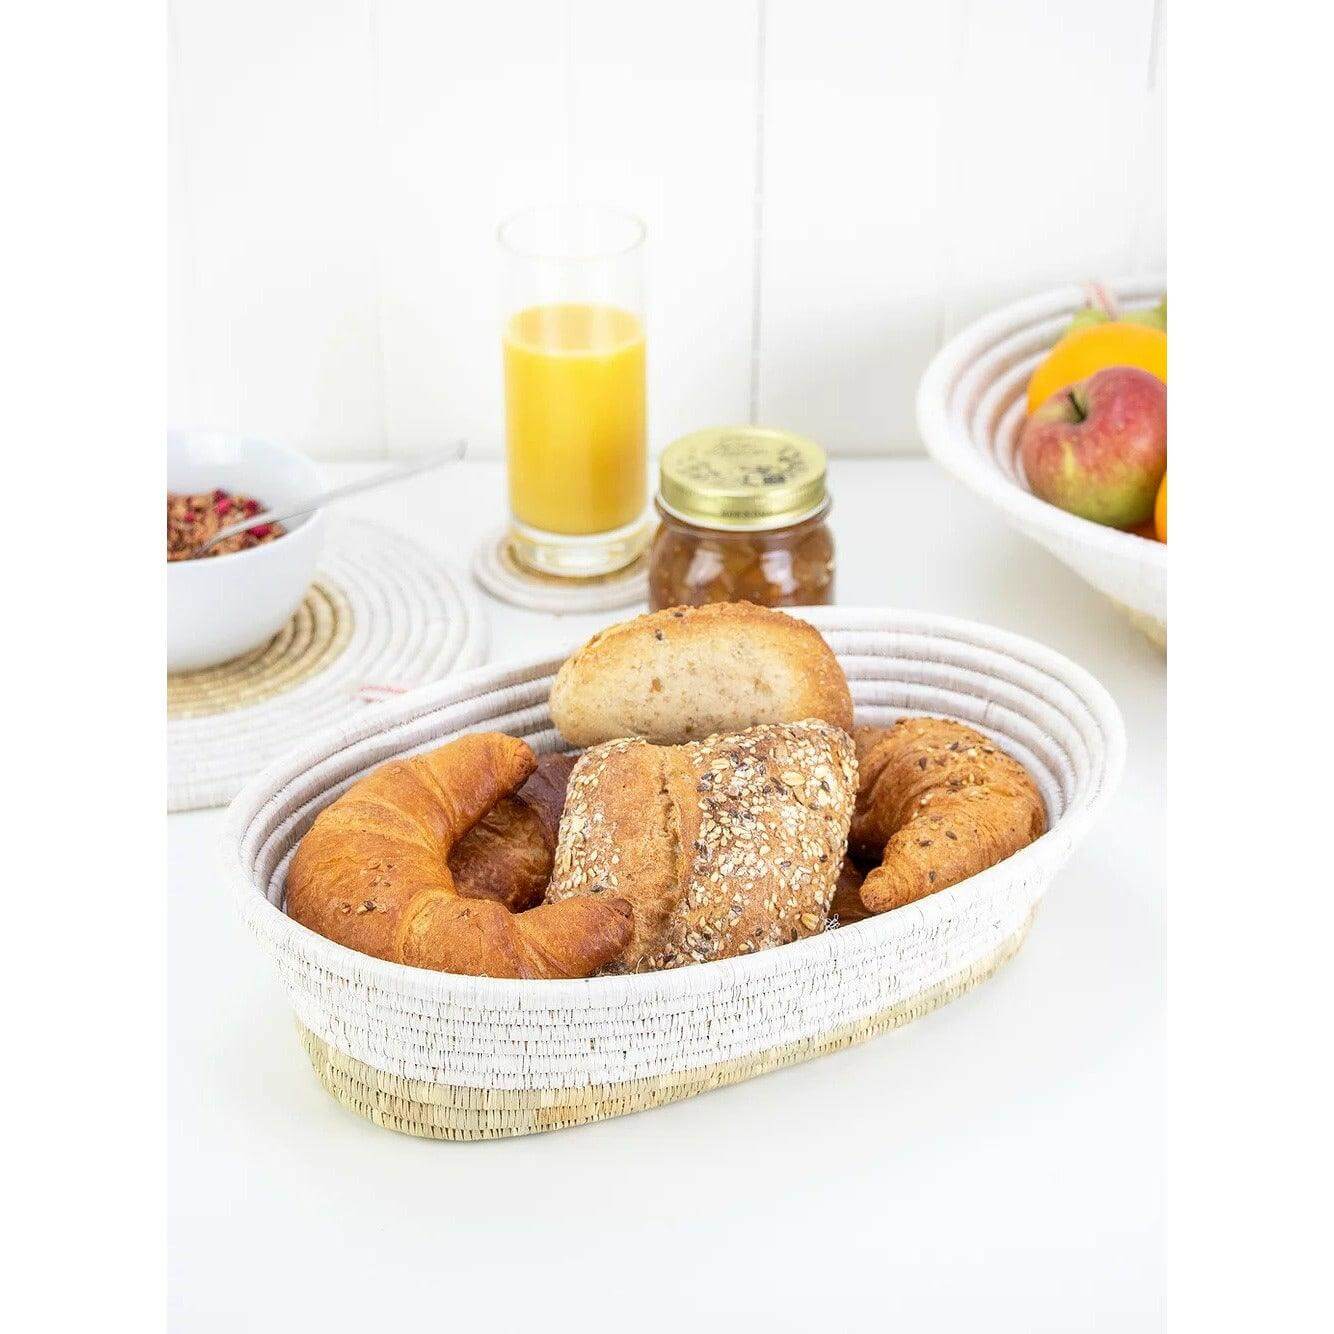 Artisan handmade woven bread basket with bread